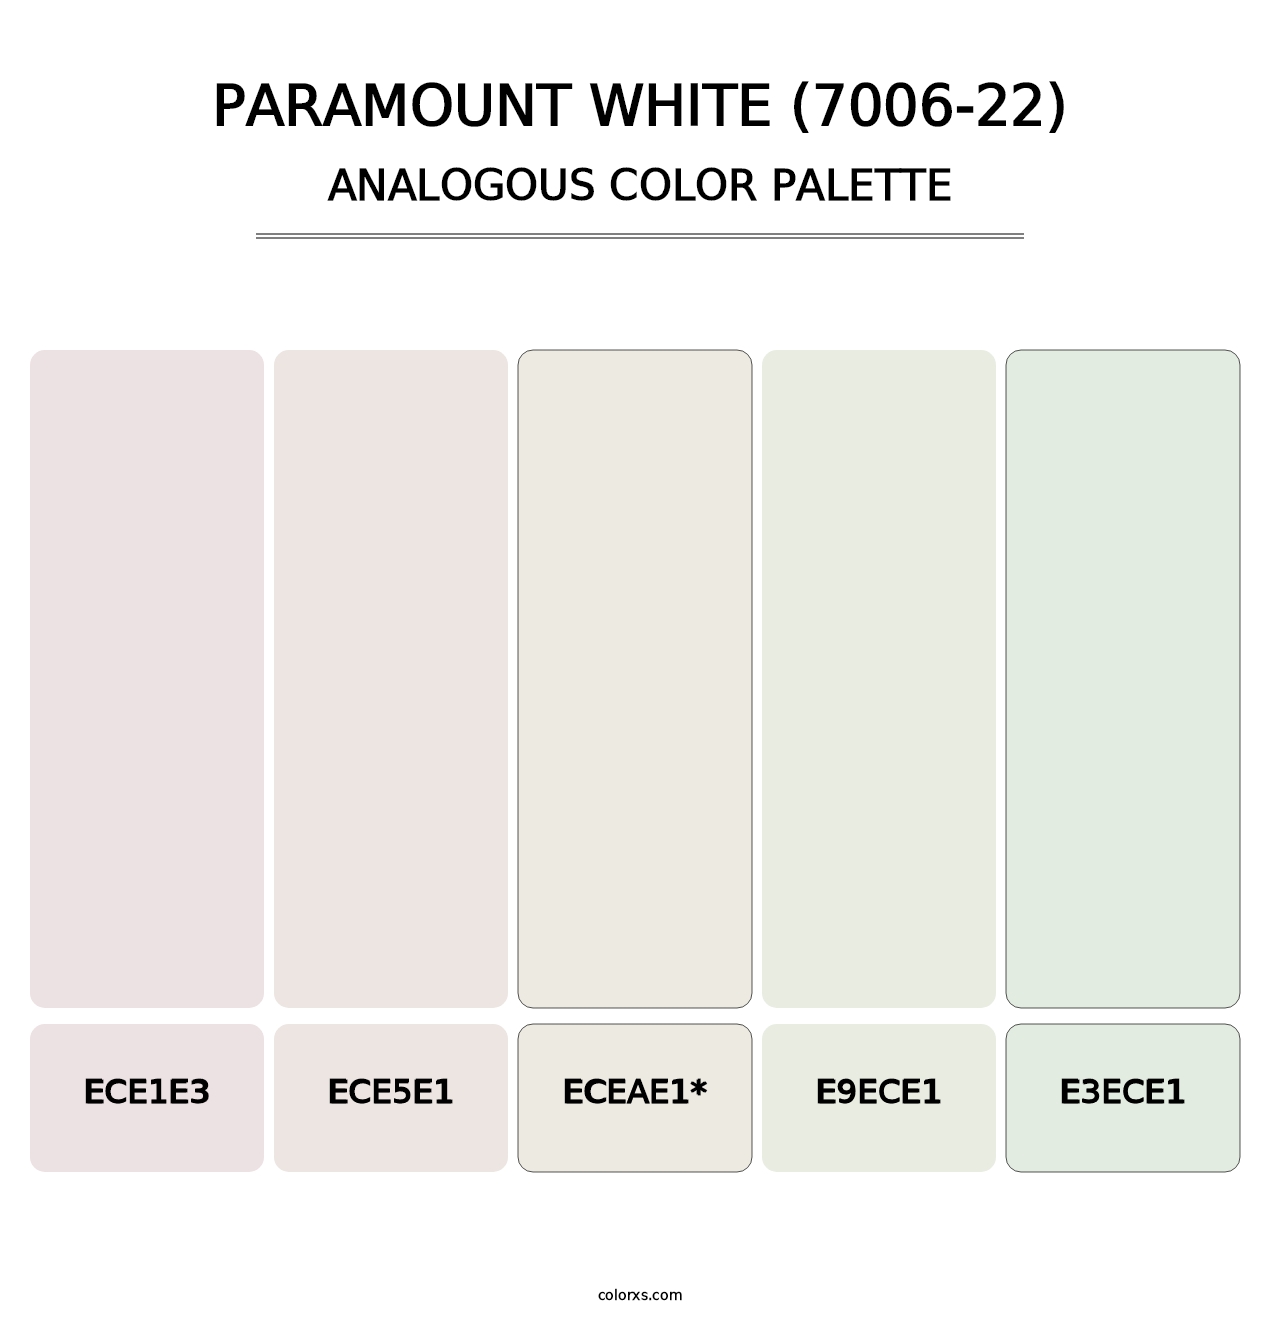 Paramount White (7006-22) - Analogous Color Palette